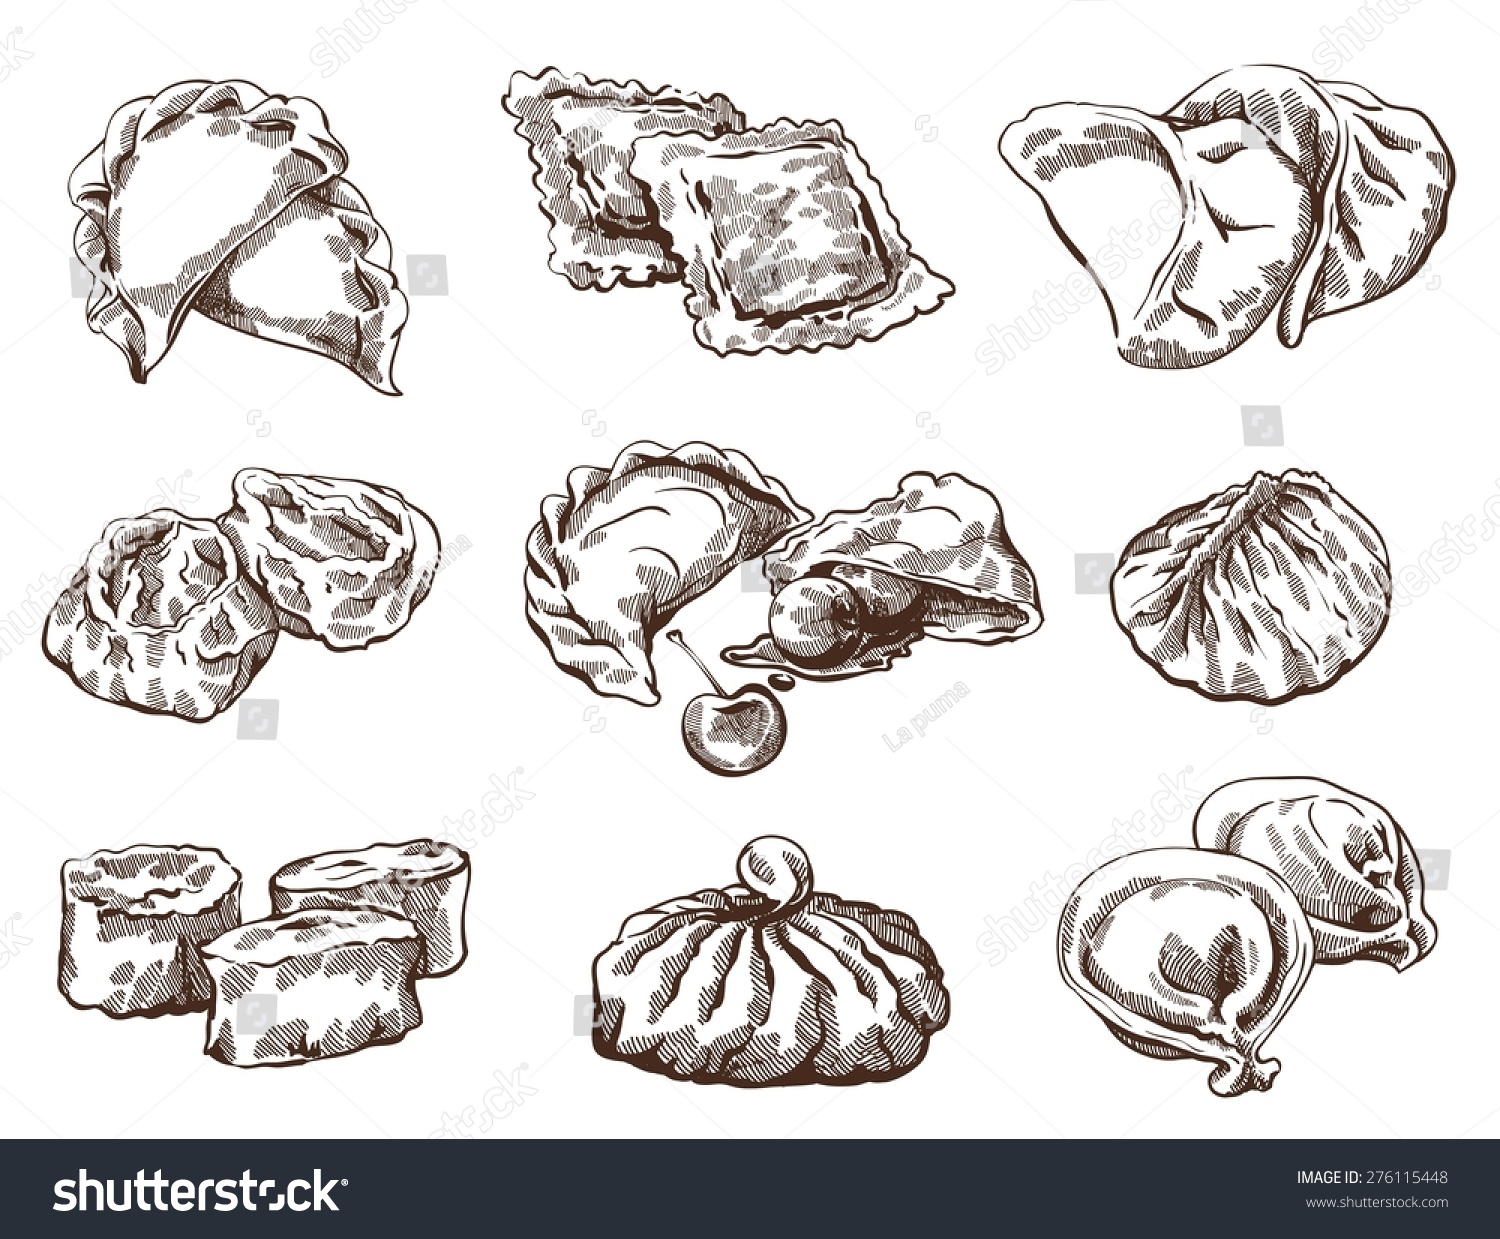 Vector Sketch Of Detailed Image With Dumplings 276115448 Shutterstock